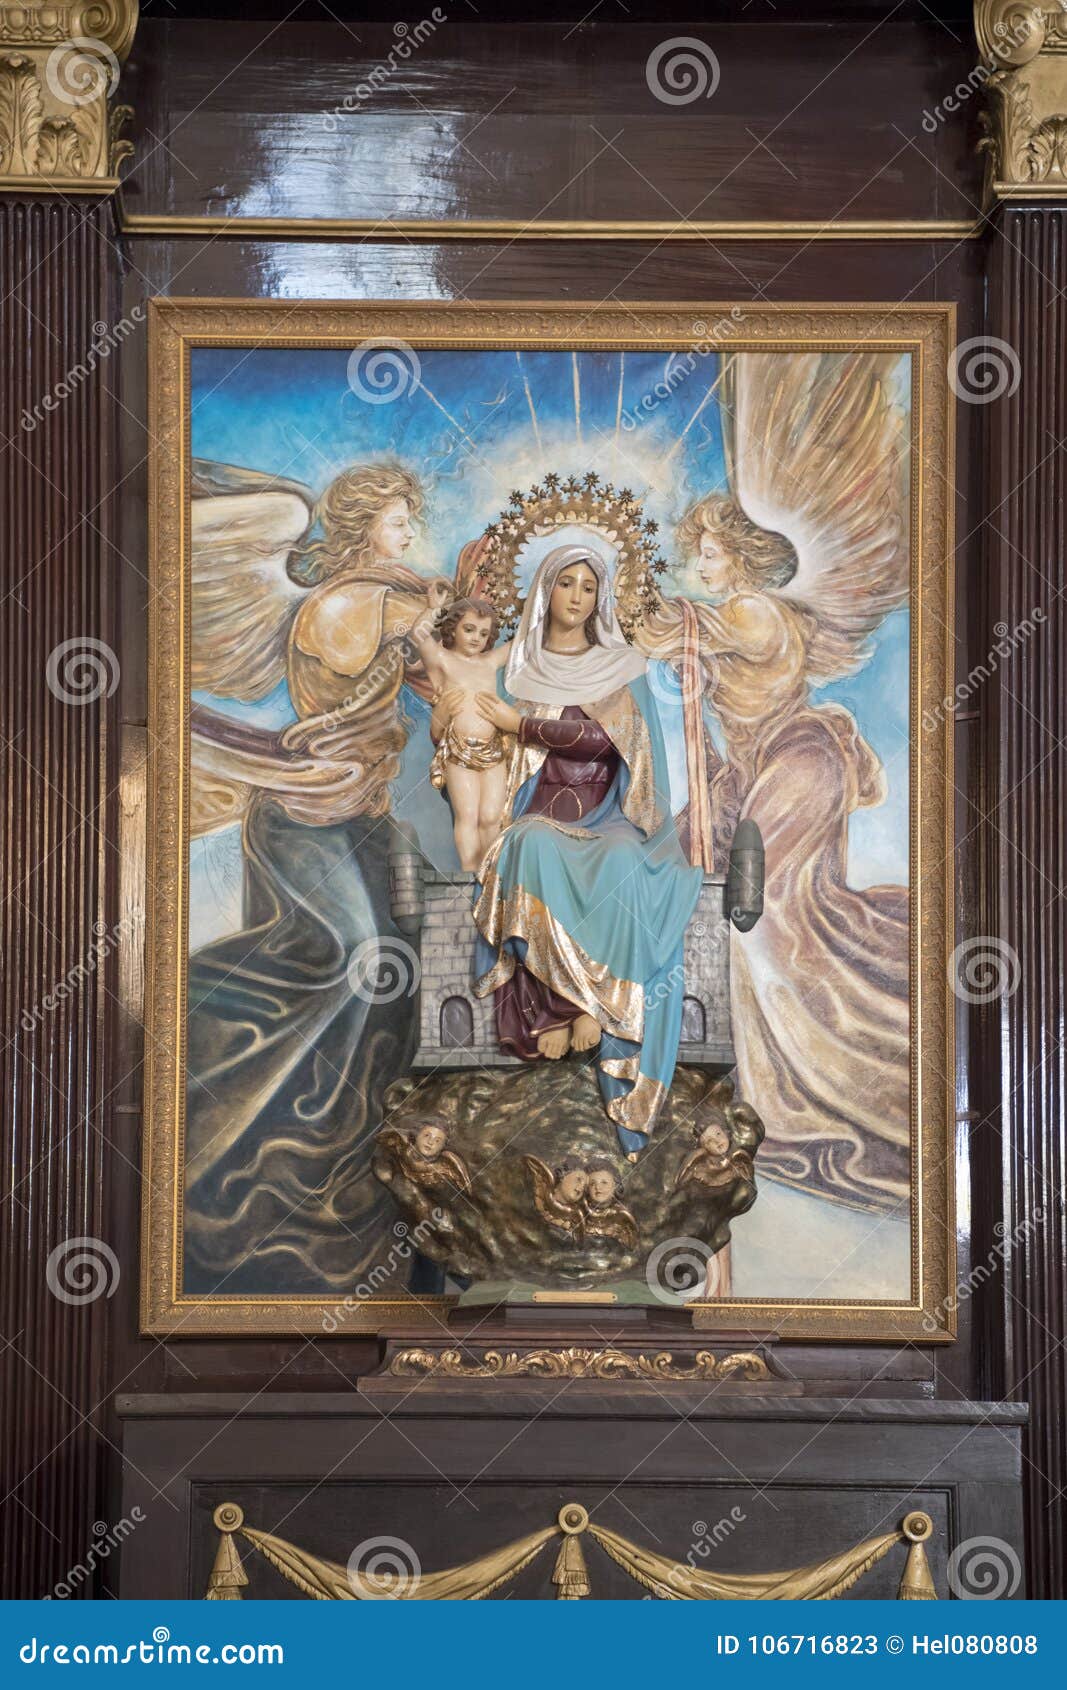 sculpture virgin mary with child jesus and painted angels, la habana, havana, cuba